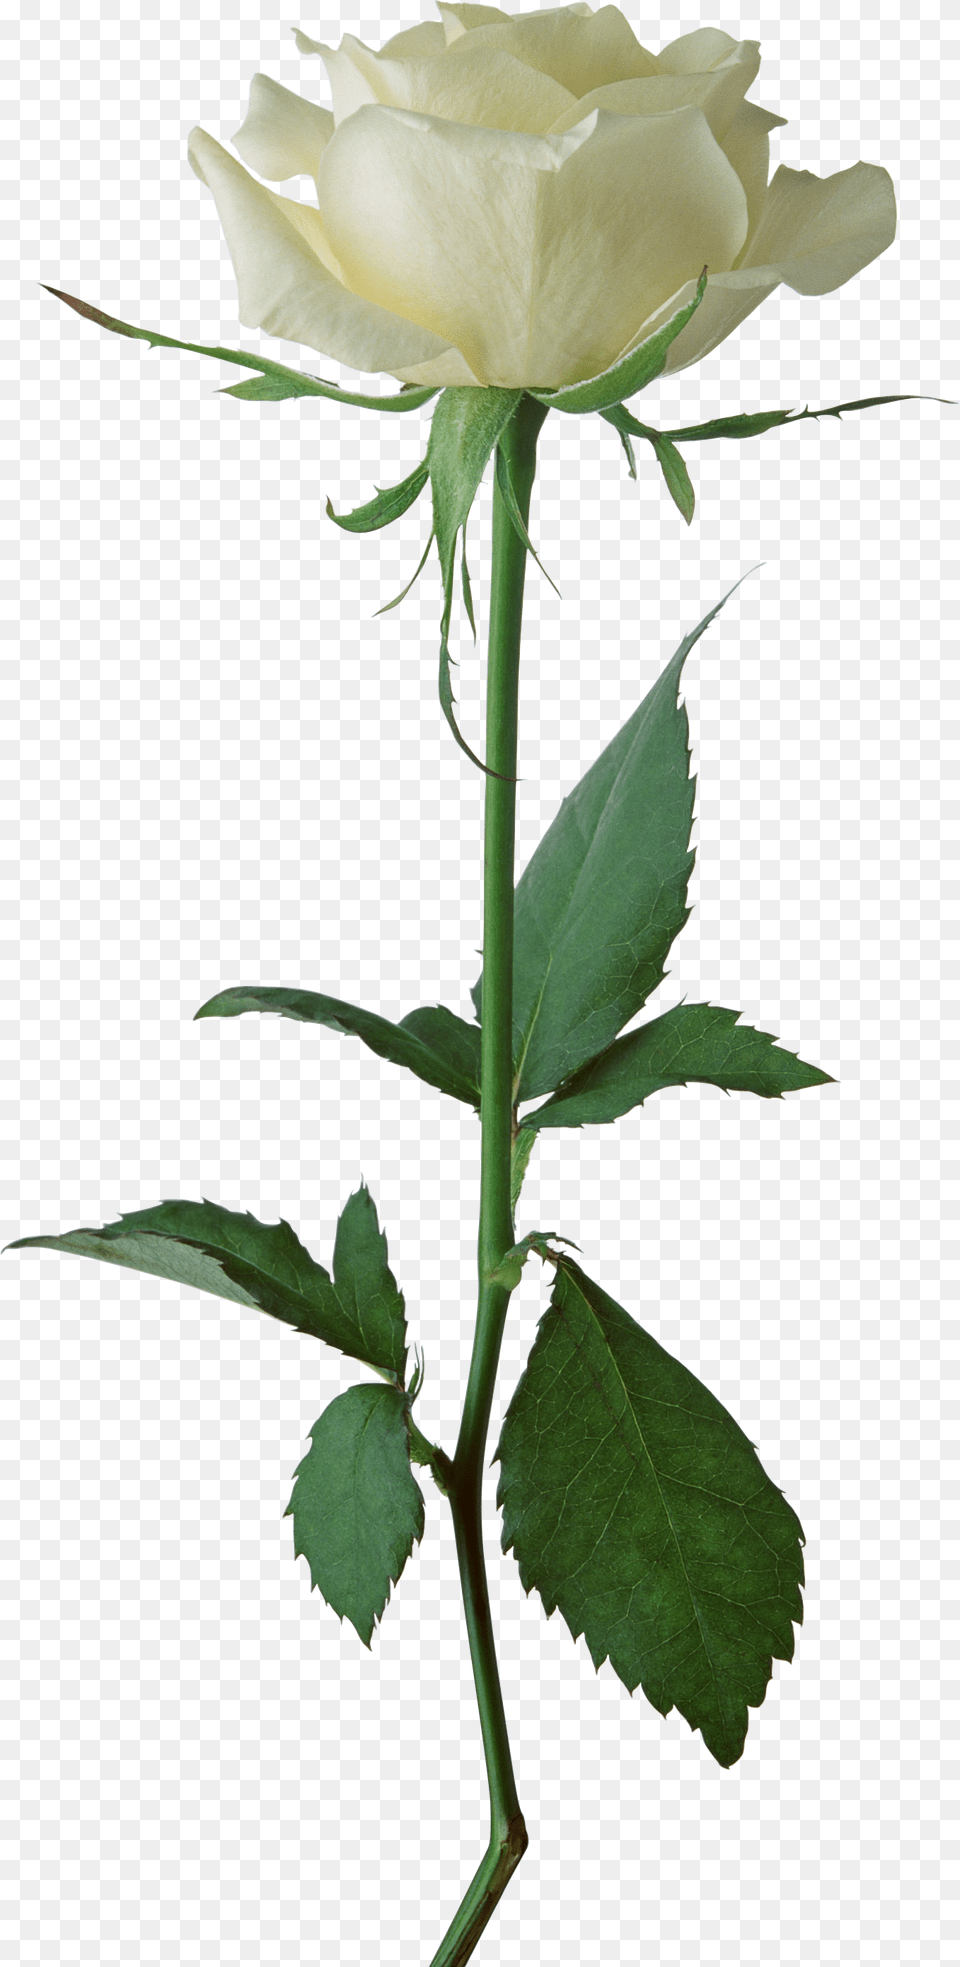 Stem Of A Plant Transparent Stem Of A Plant, Flower, Rose Png